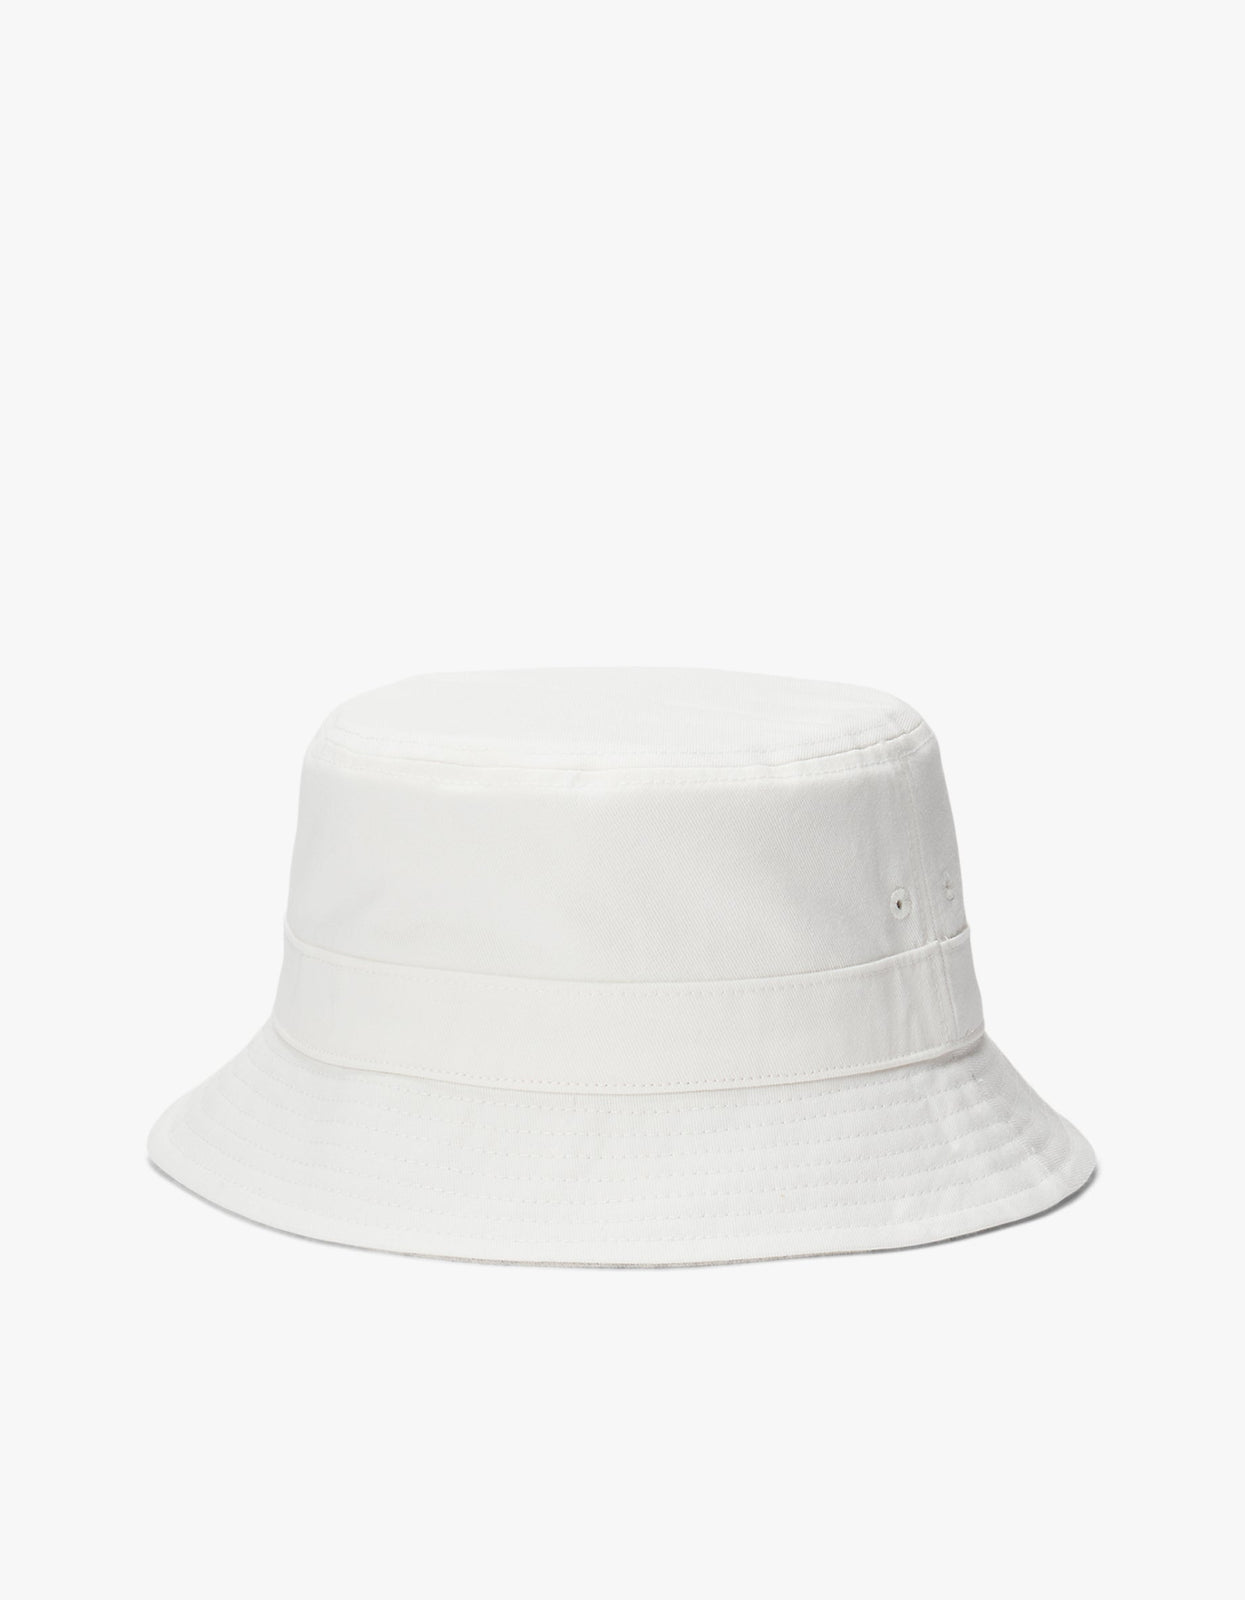 & | Superette Bucket Hat - Deckwash Twill White Fleece Reversible